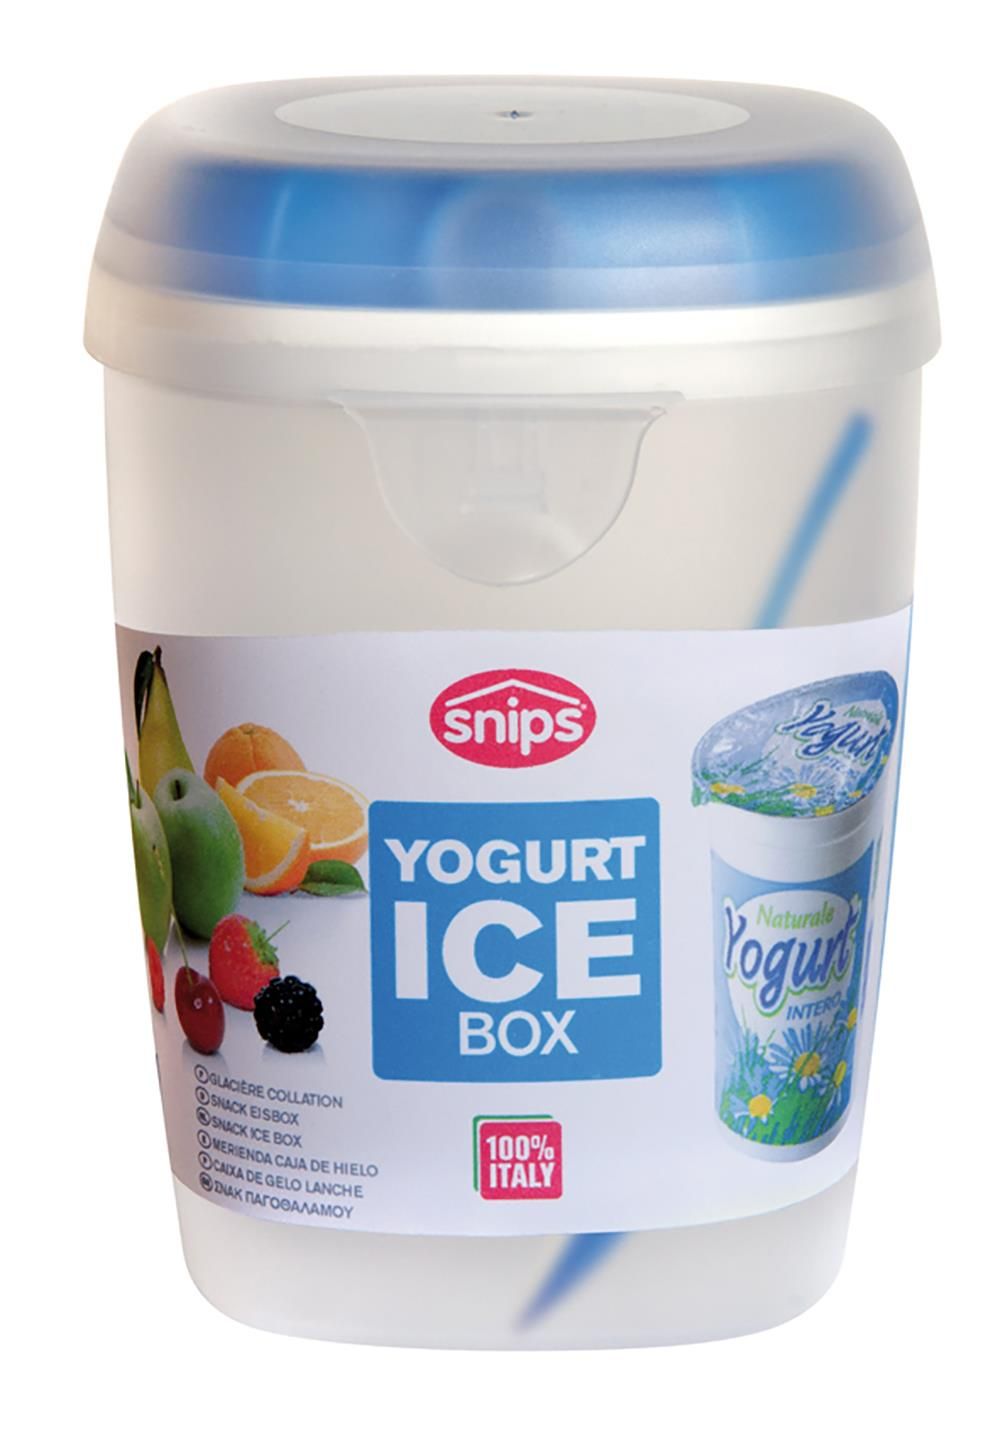 Porta yogurt - Mobili usati 